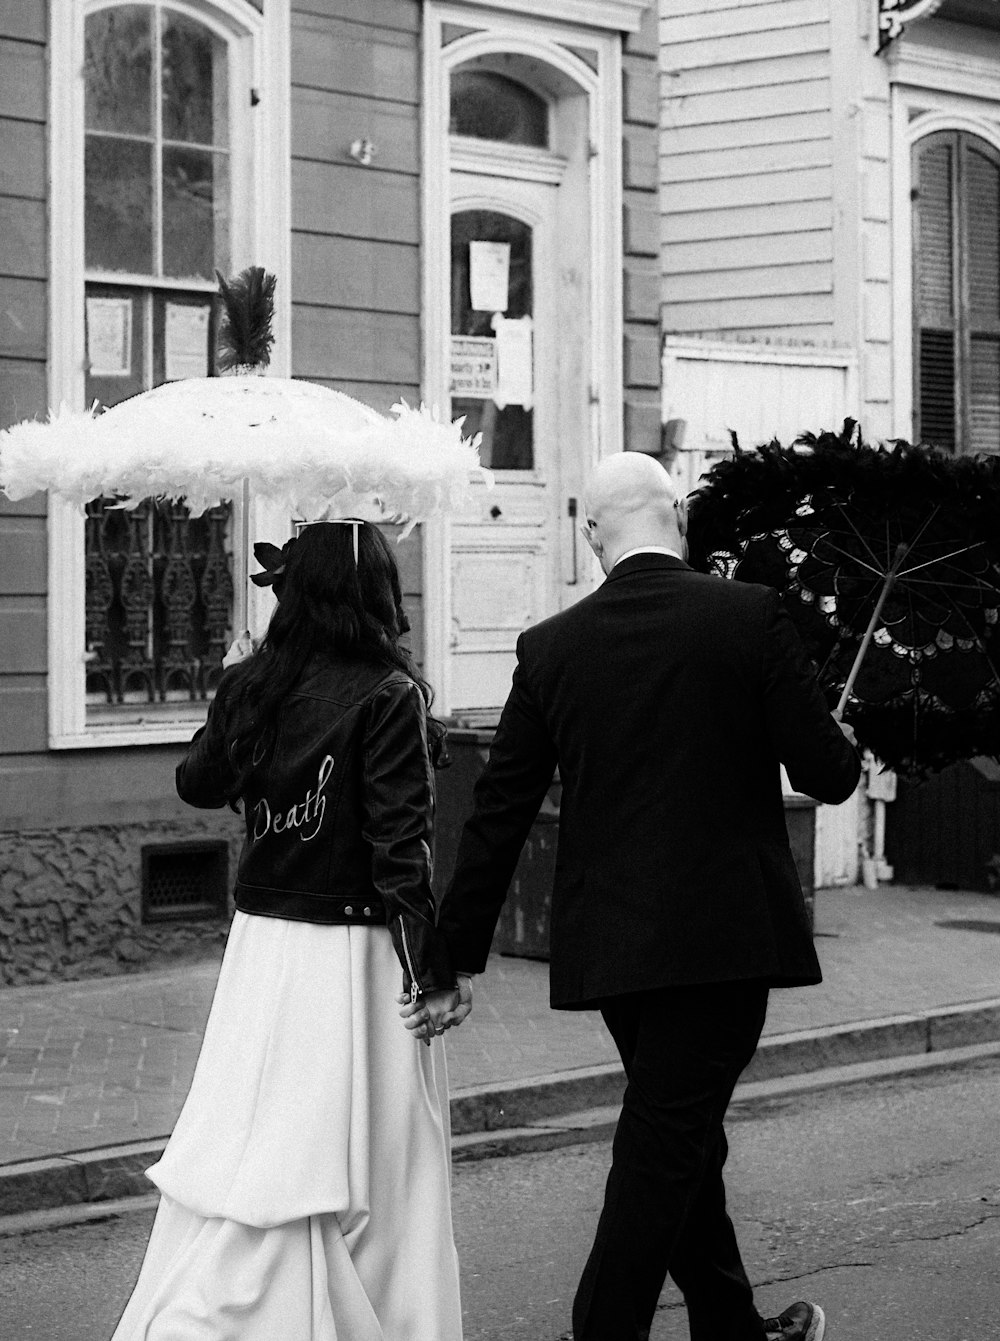 a man and woman walking down a street holding an umbrella